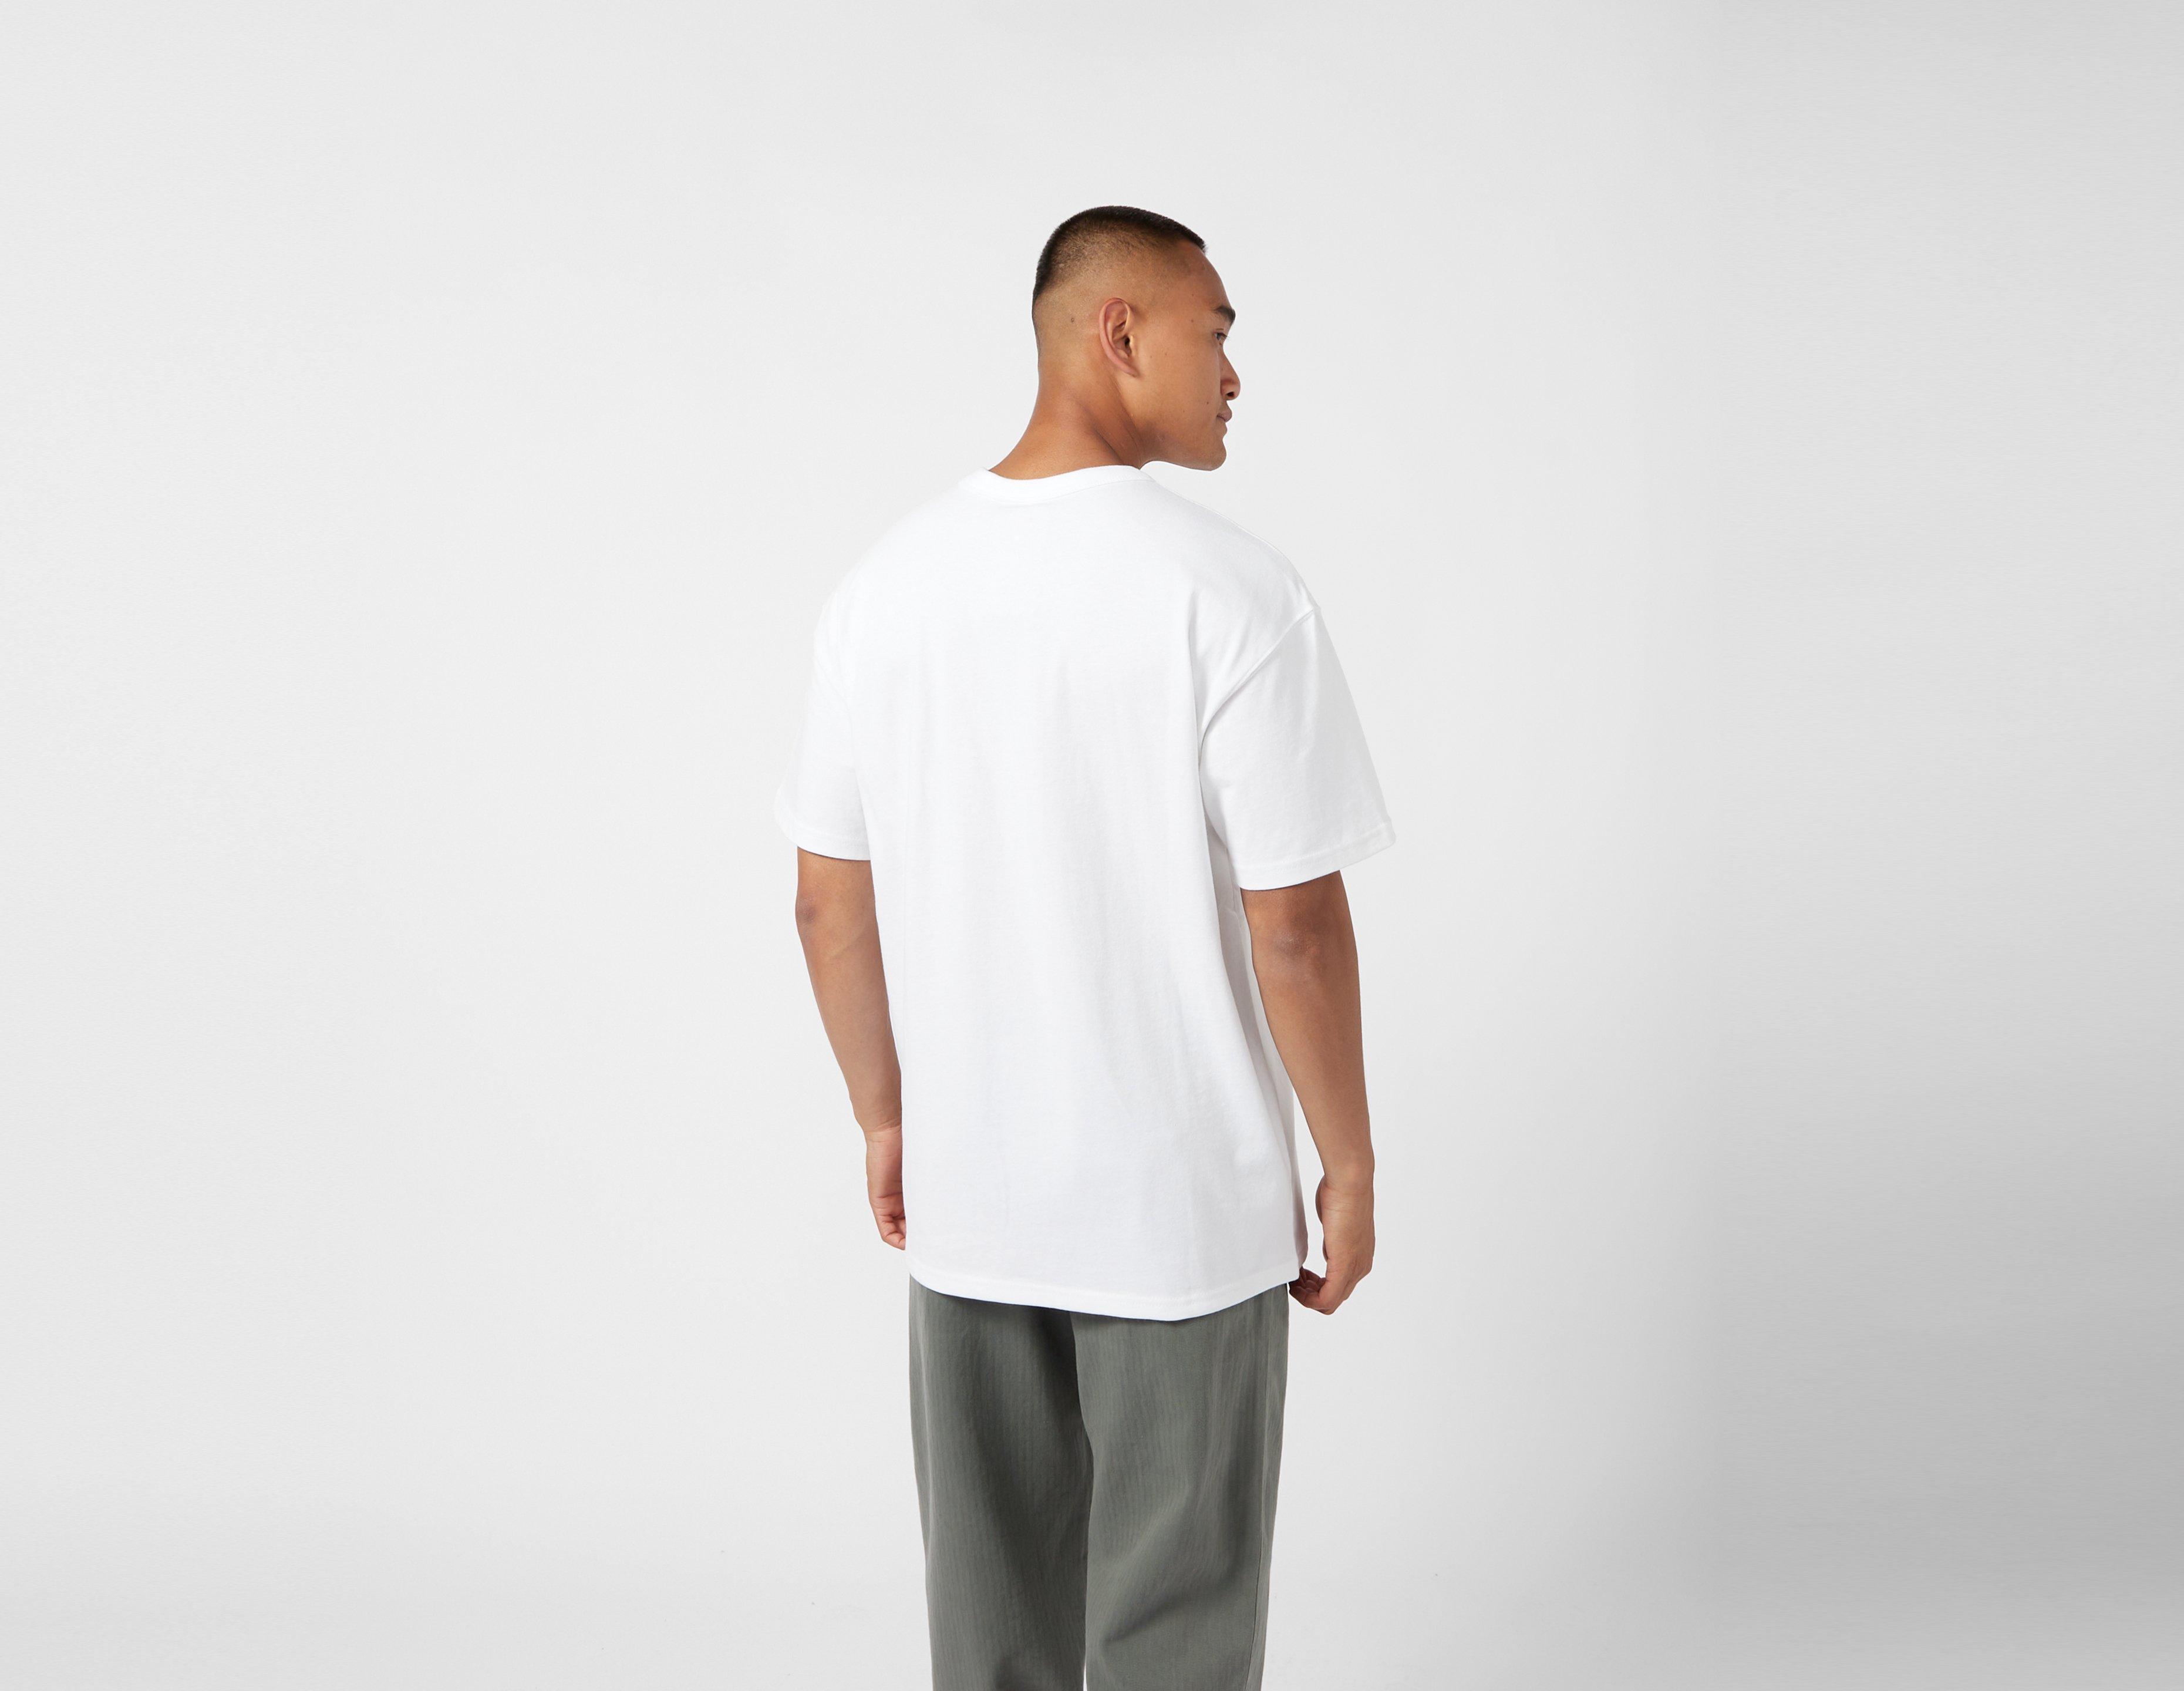 Premium for Shirt sale - Pocket advantage White Healthdesign? owner T | NSW air Essentials vapour by nike Nike -